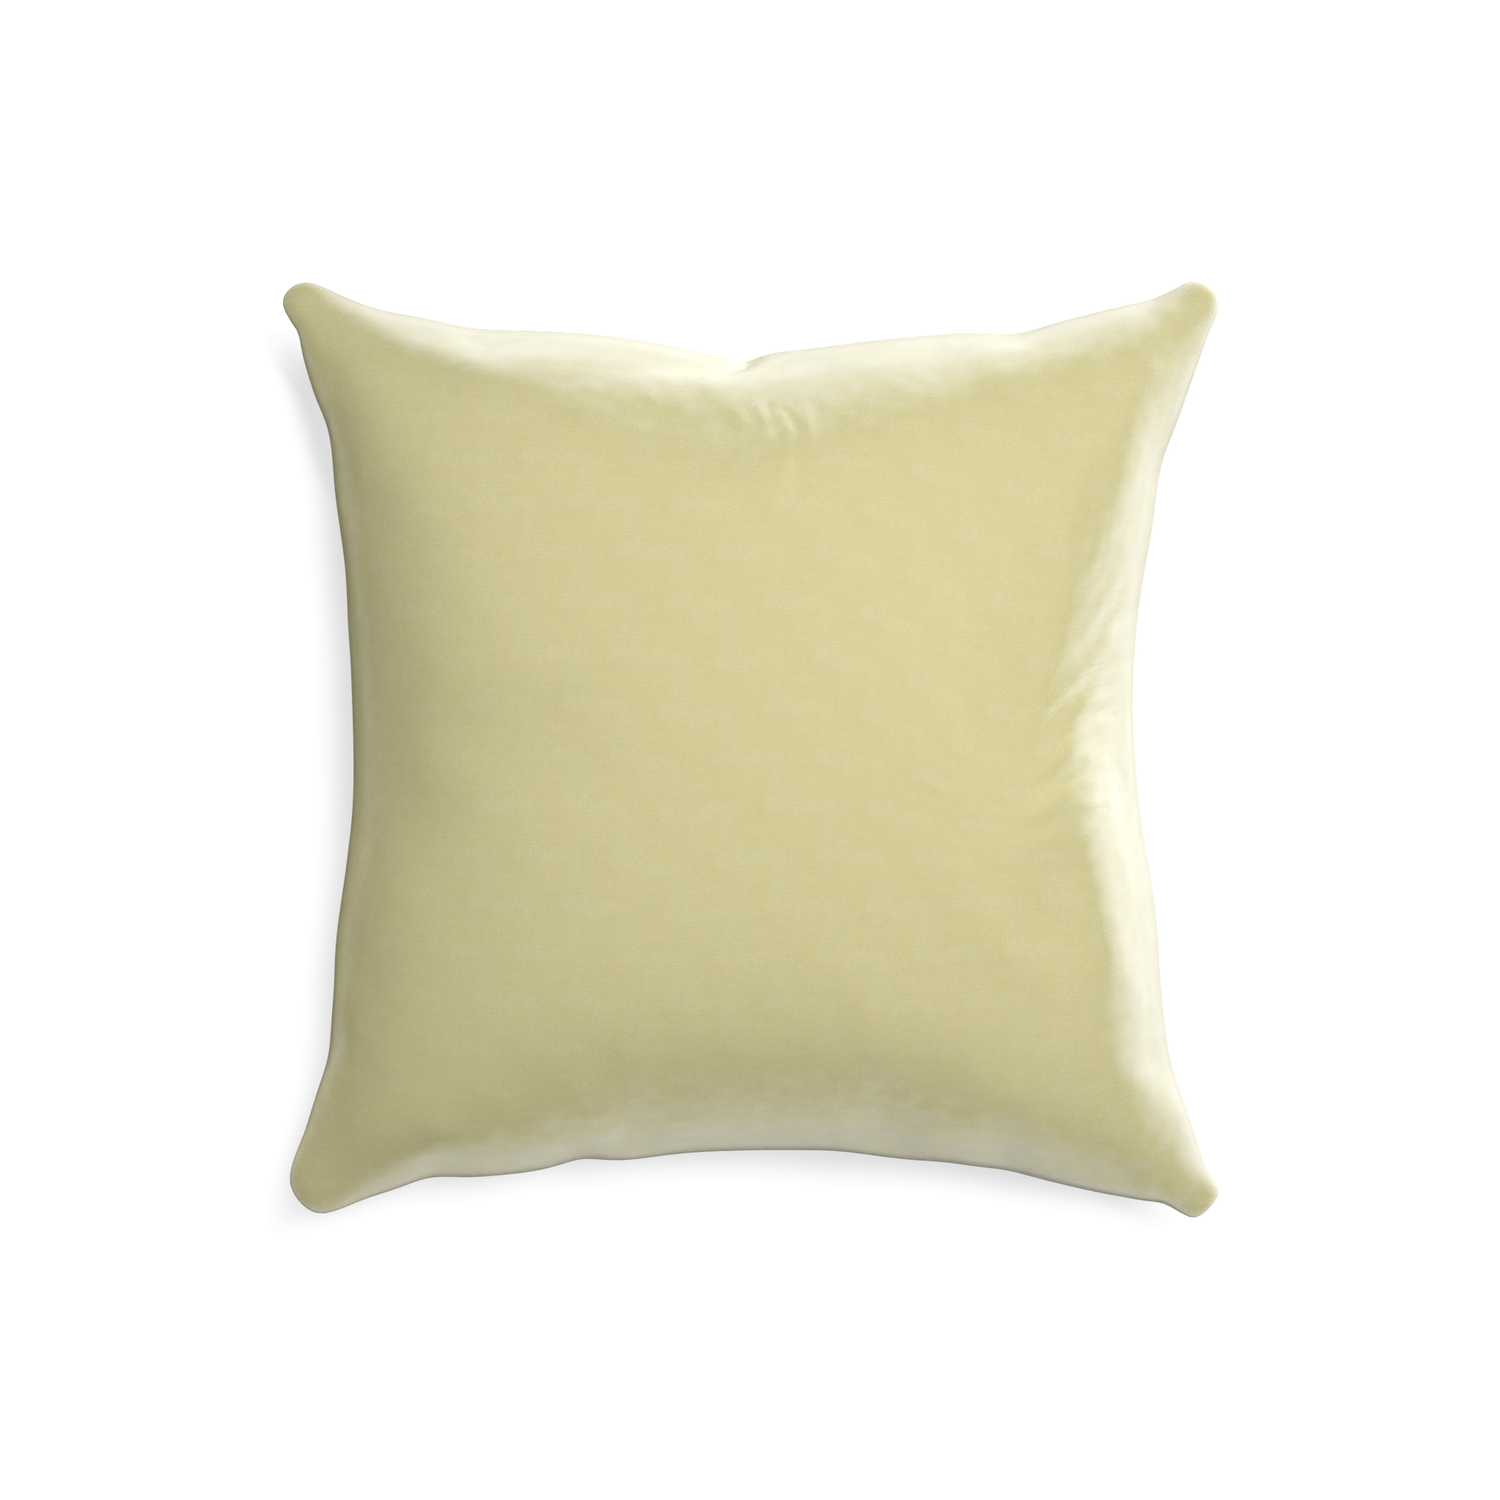 20-square pear velvet custom pillow with none on white background